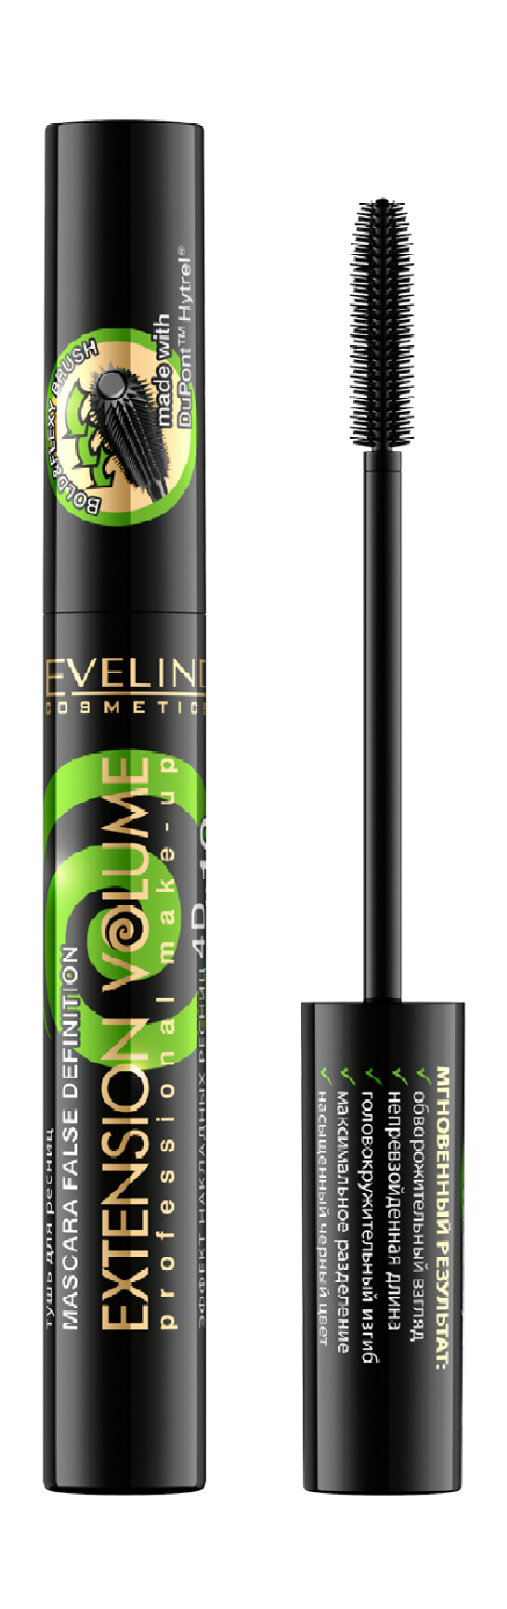 EVELINE Тушь для ресниц Extension Volume Professional Make-Up экстремальная длина и изгиб х10, 10 мл, Black